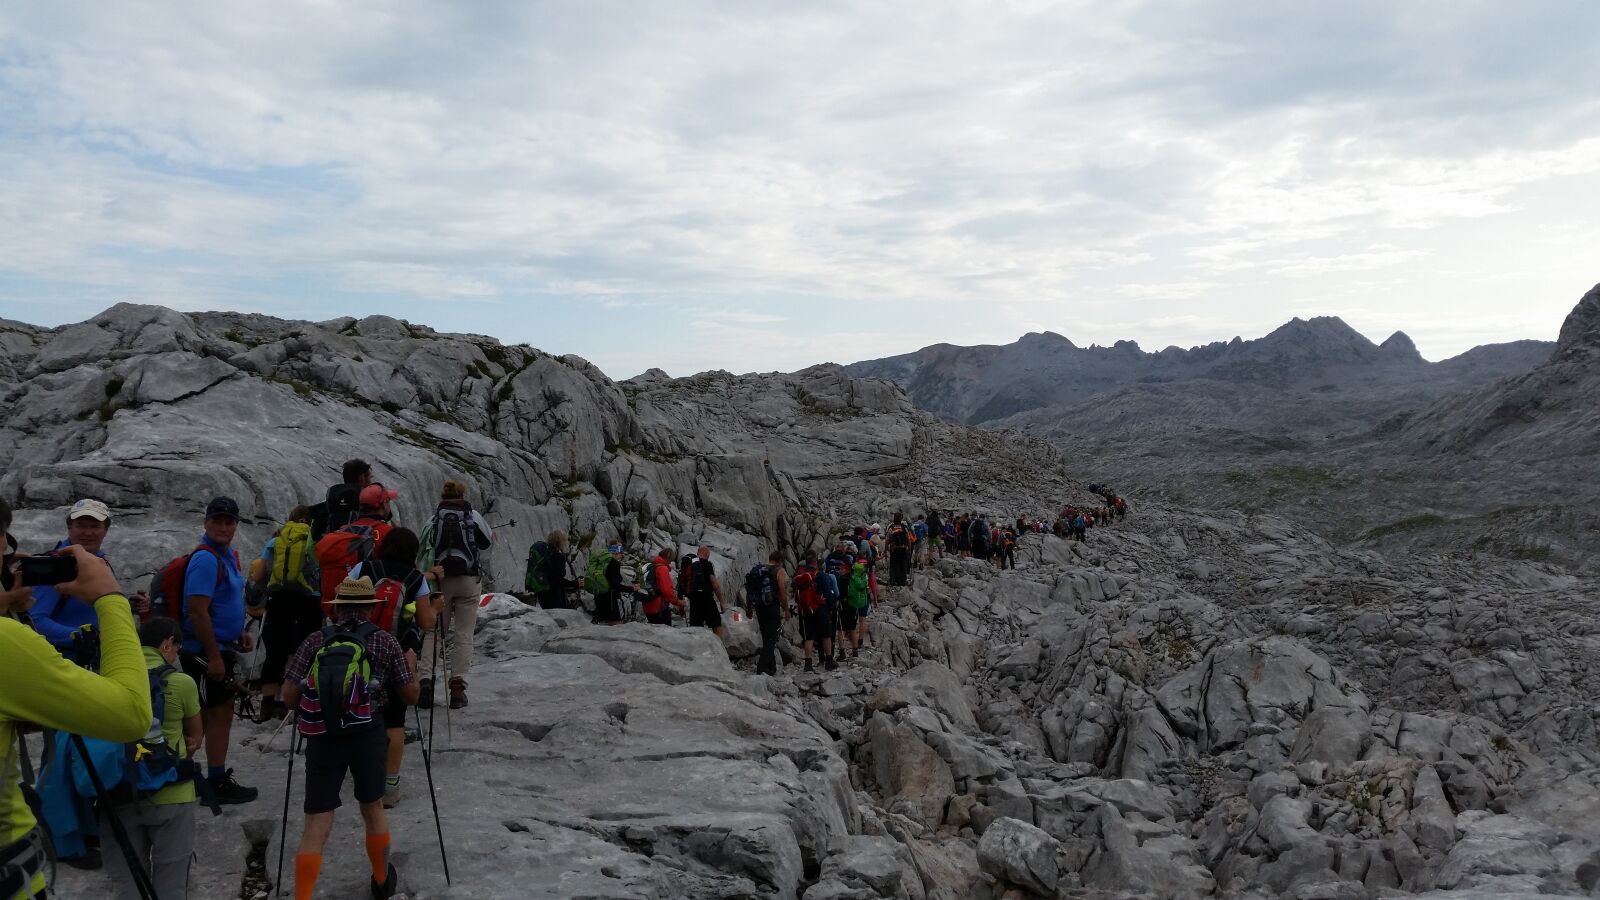 Samsung Galaxy S5 sample photo. Mountains, hiking, mass tourism photography